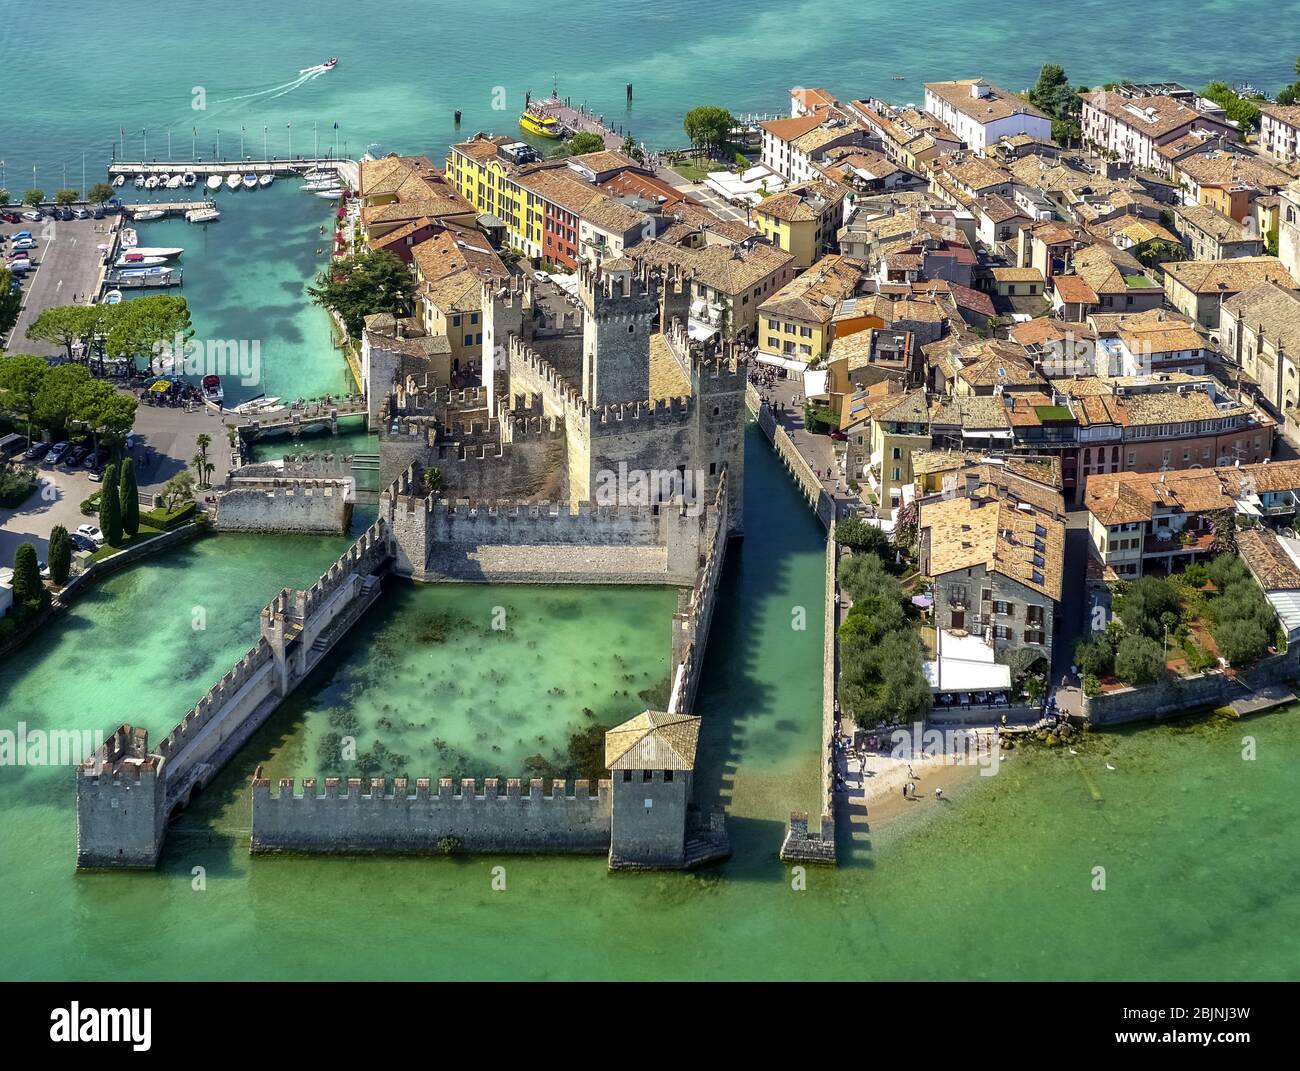 castel Castello Di Sirmione on peninsula Sirmione on Lago di Garda,  01.09.2016, aerial view, Italy, Lombardy, Lake Garda, Sirmione Stock Photo  - Alamy